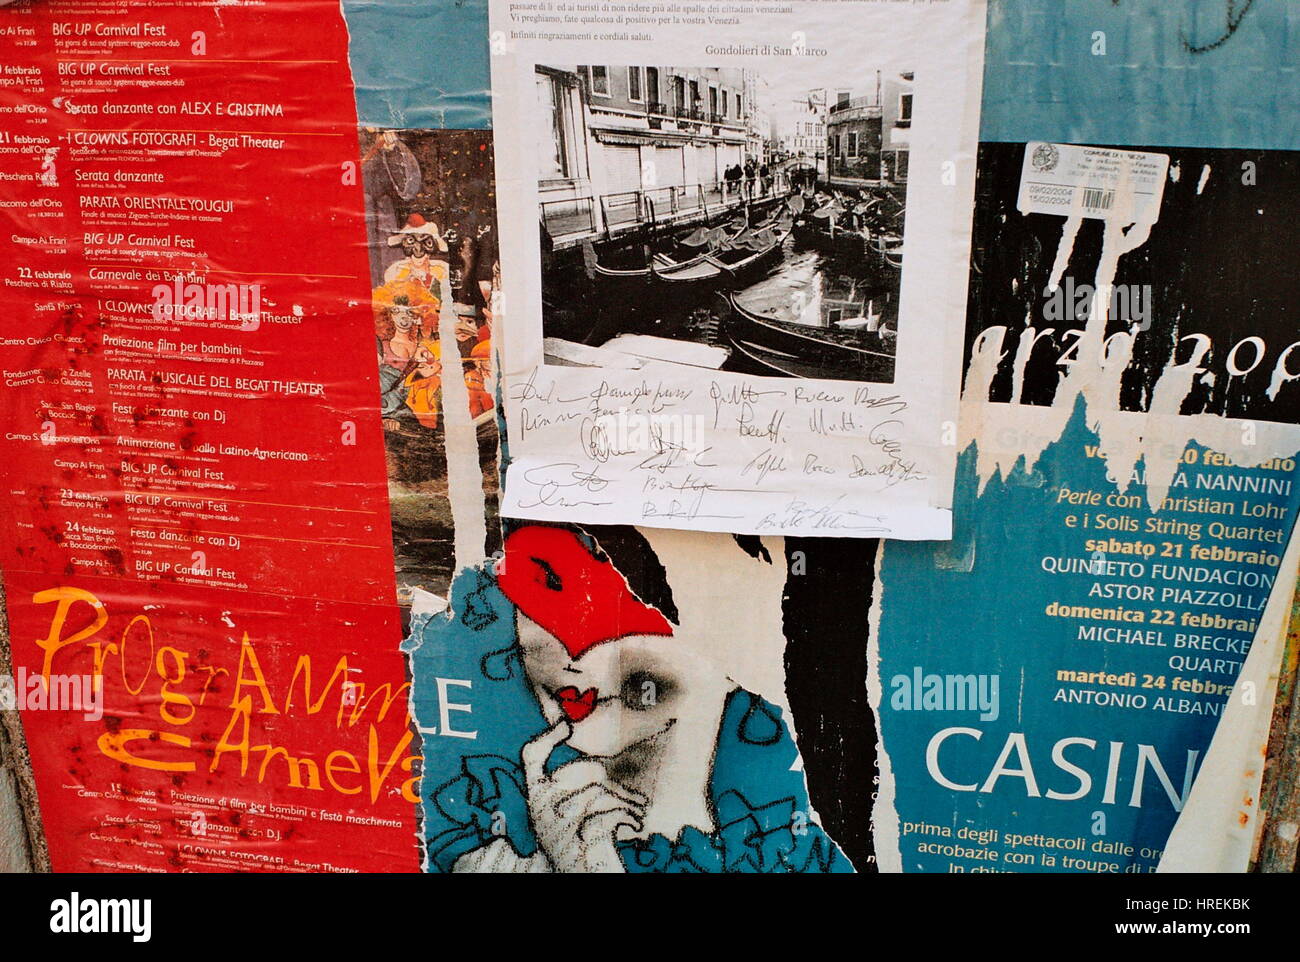 AJAXNETPHOTO. Venezia, Italia. - Poster su una parete. Foto:JONATHAN EASTLAND/AJAX REF:51011 25 26A 4290 Foto Stock